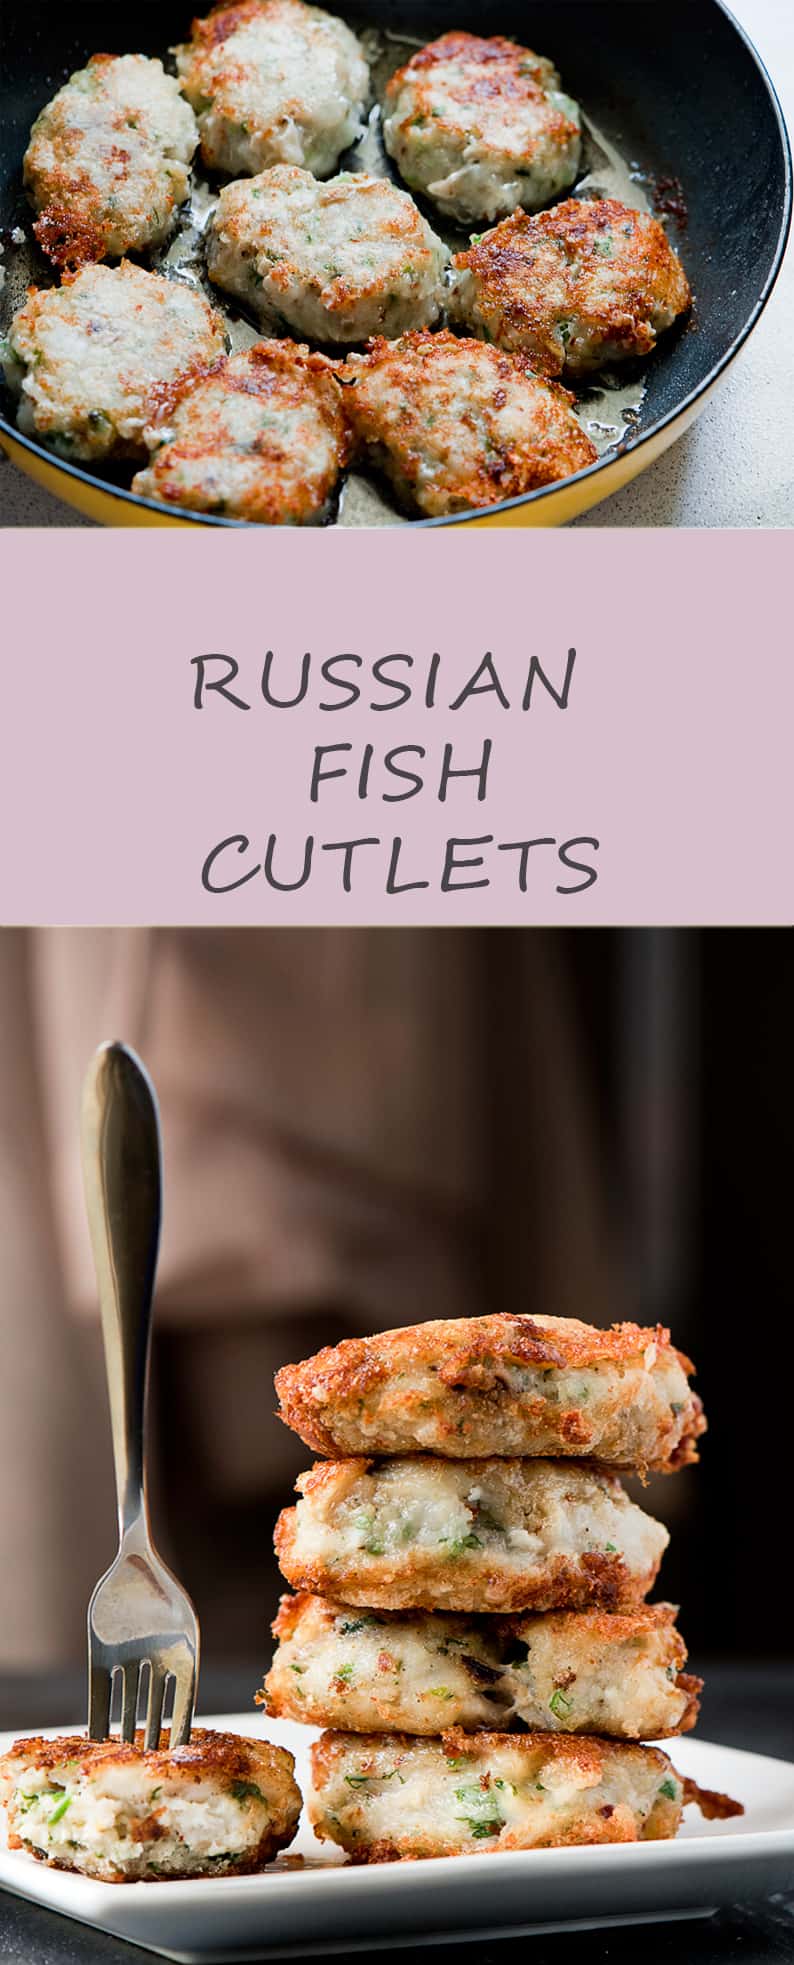 Fish cutlets